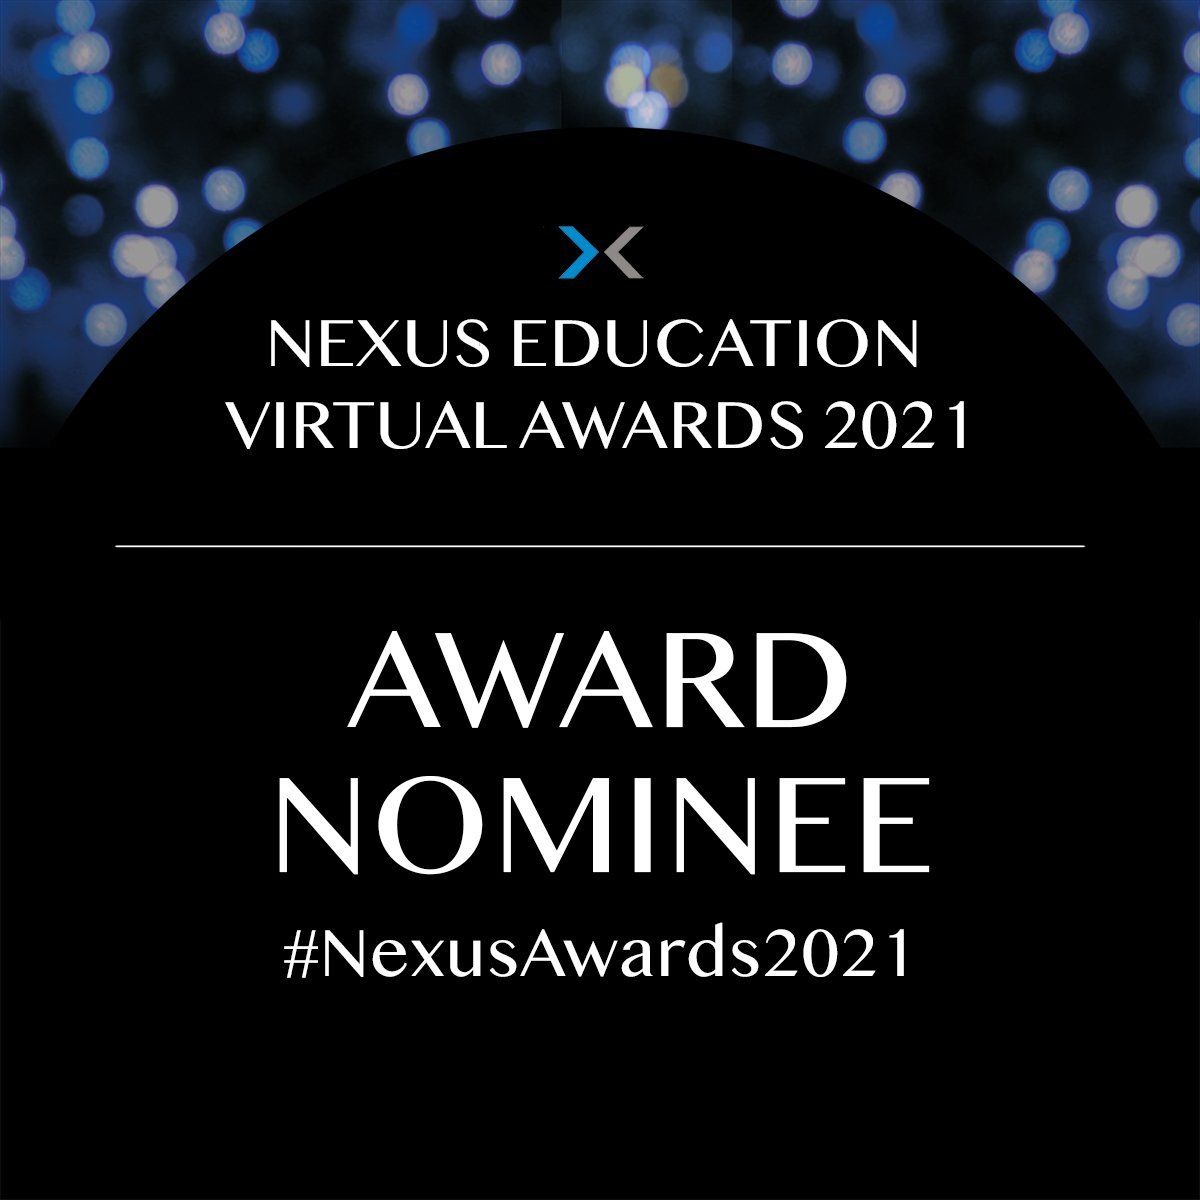 Nexus Education award nominee 2021